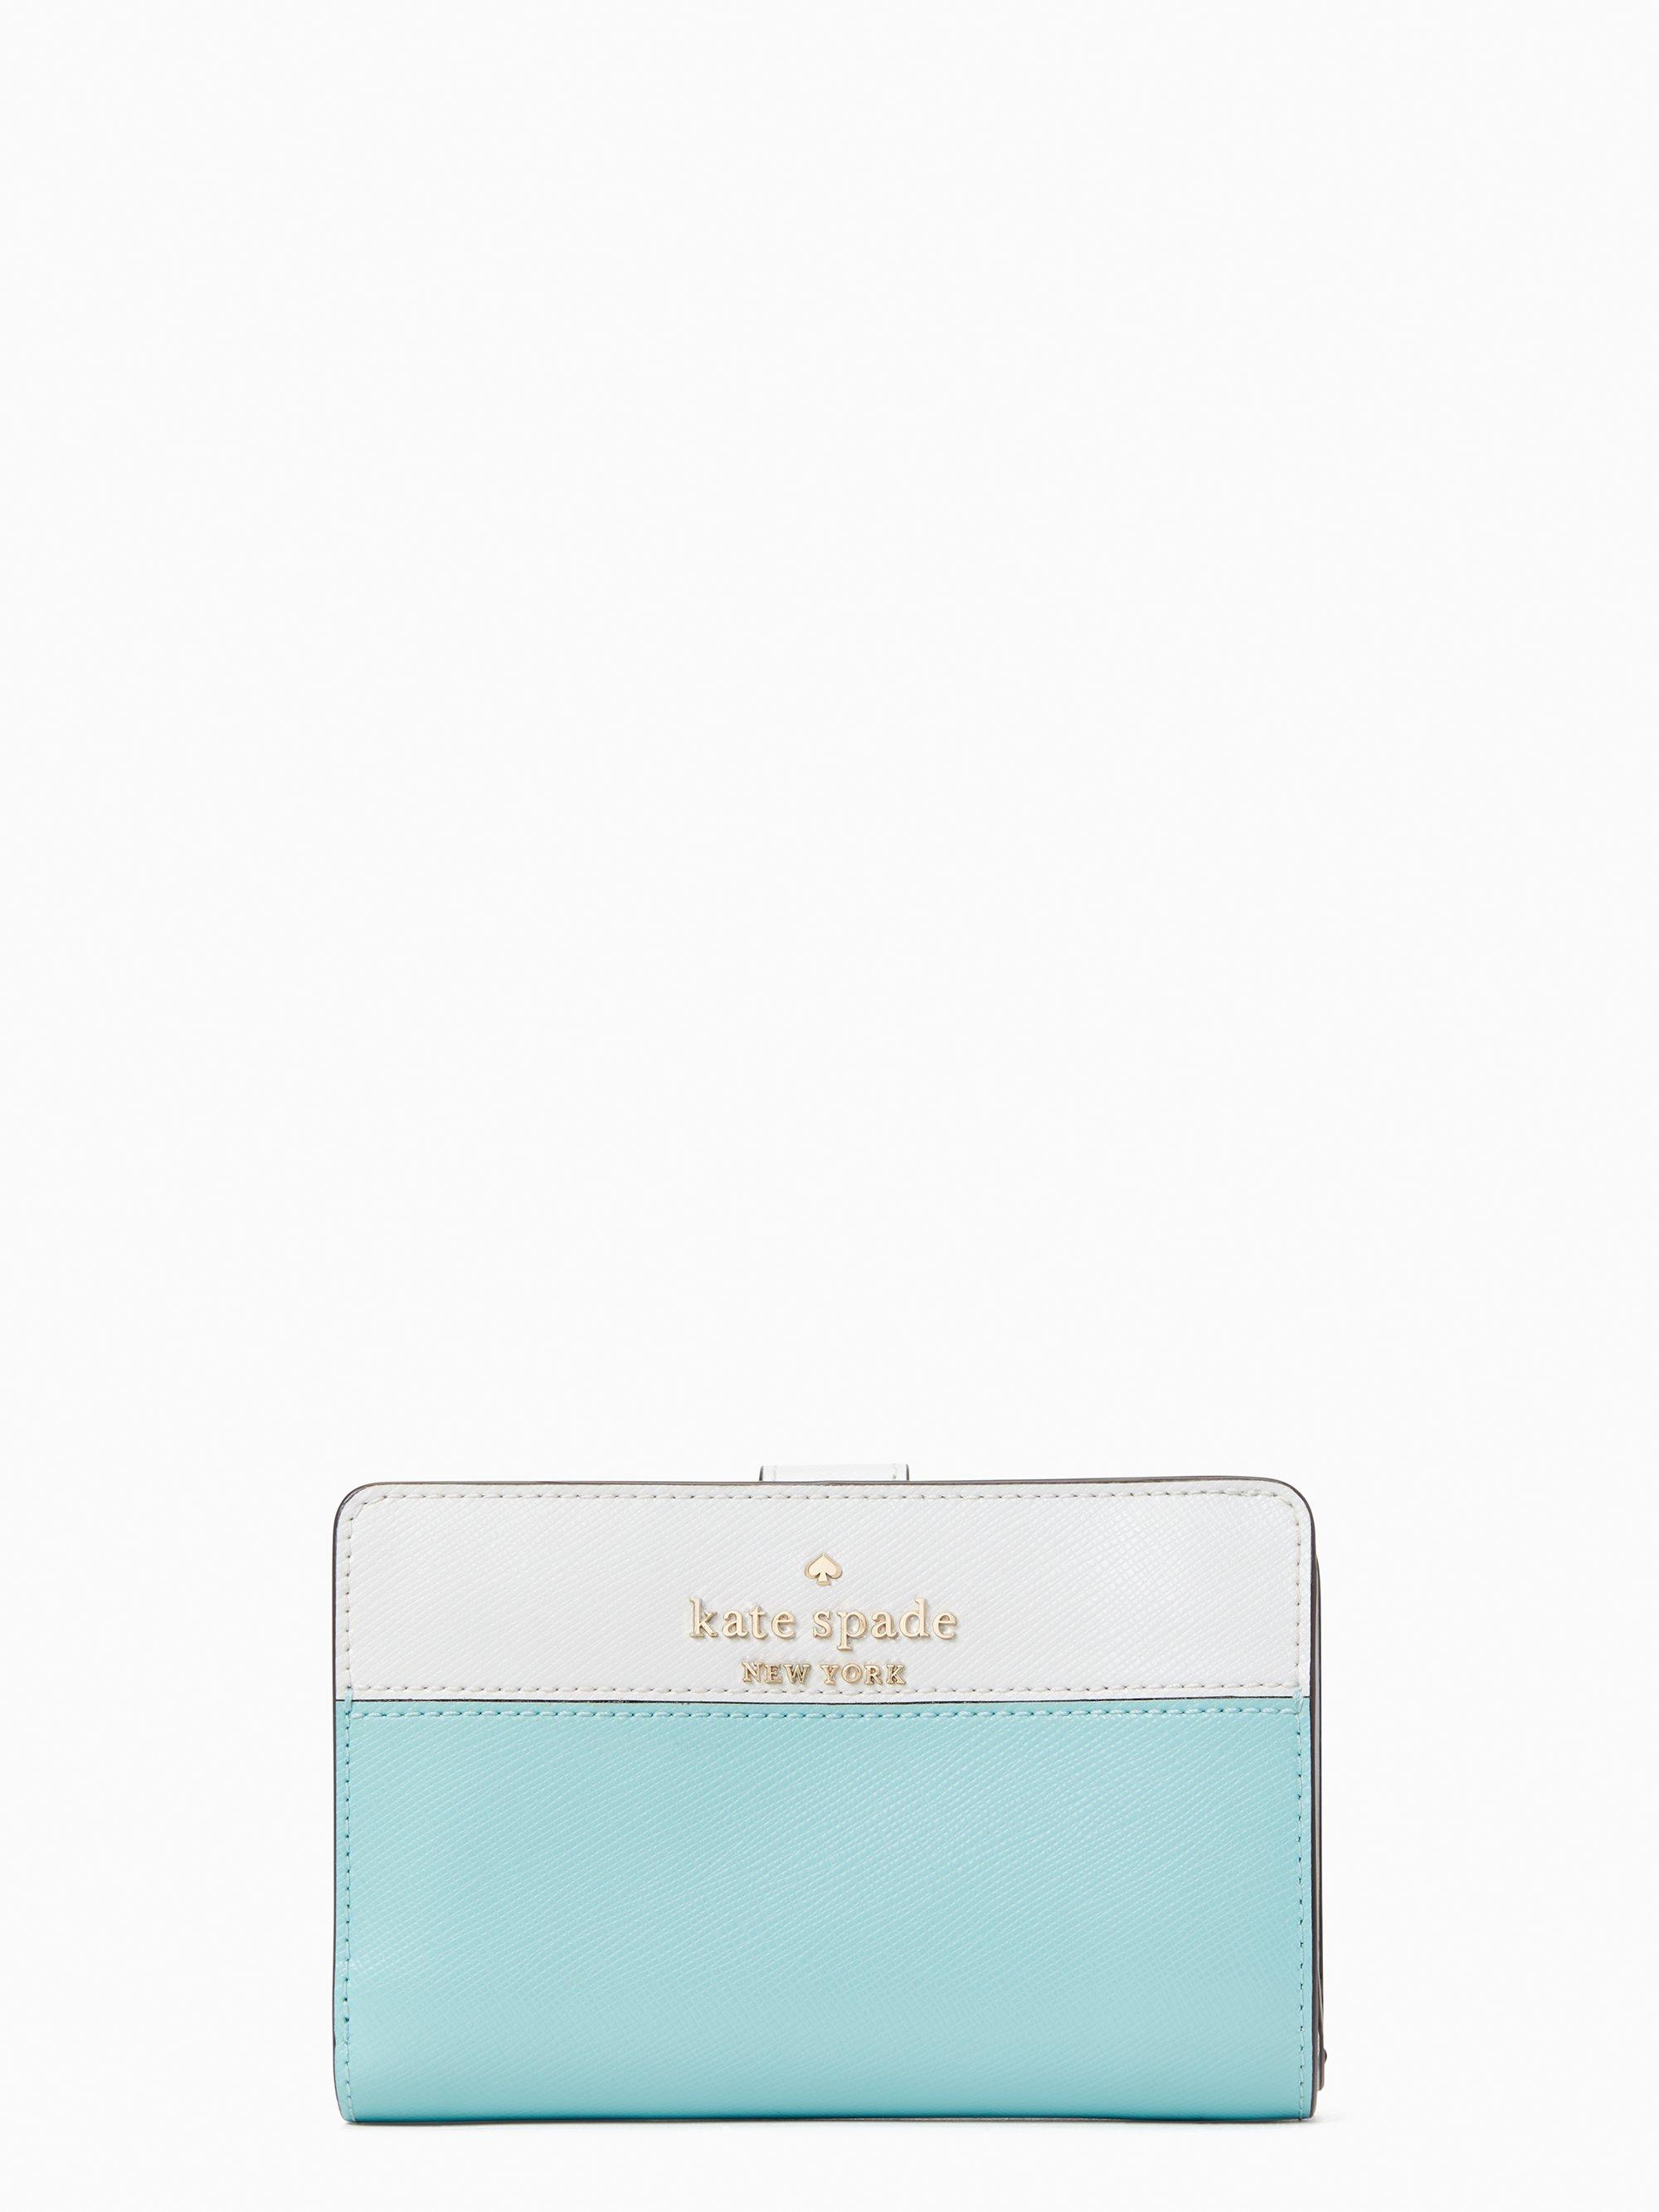 Kate Spade Staci Colorblock Medium Compact Bifold Wallet in 